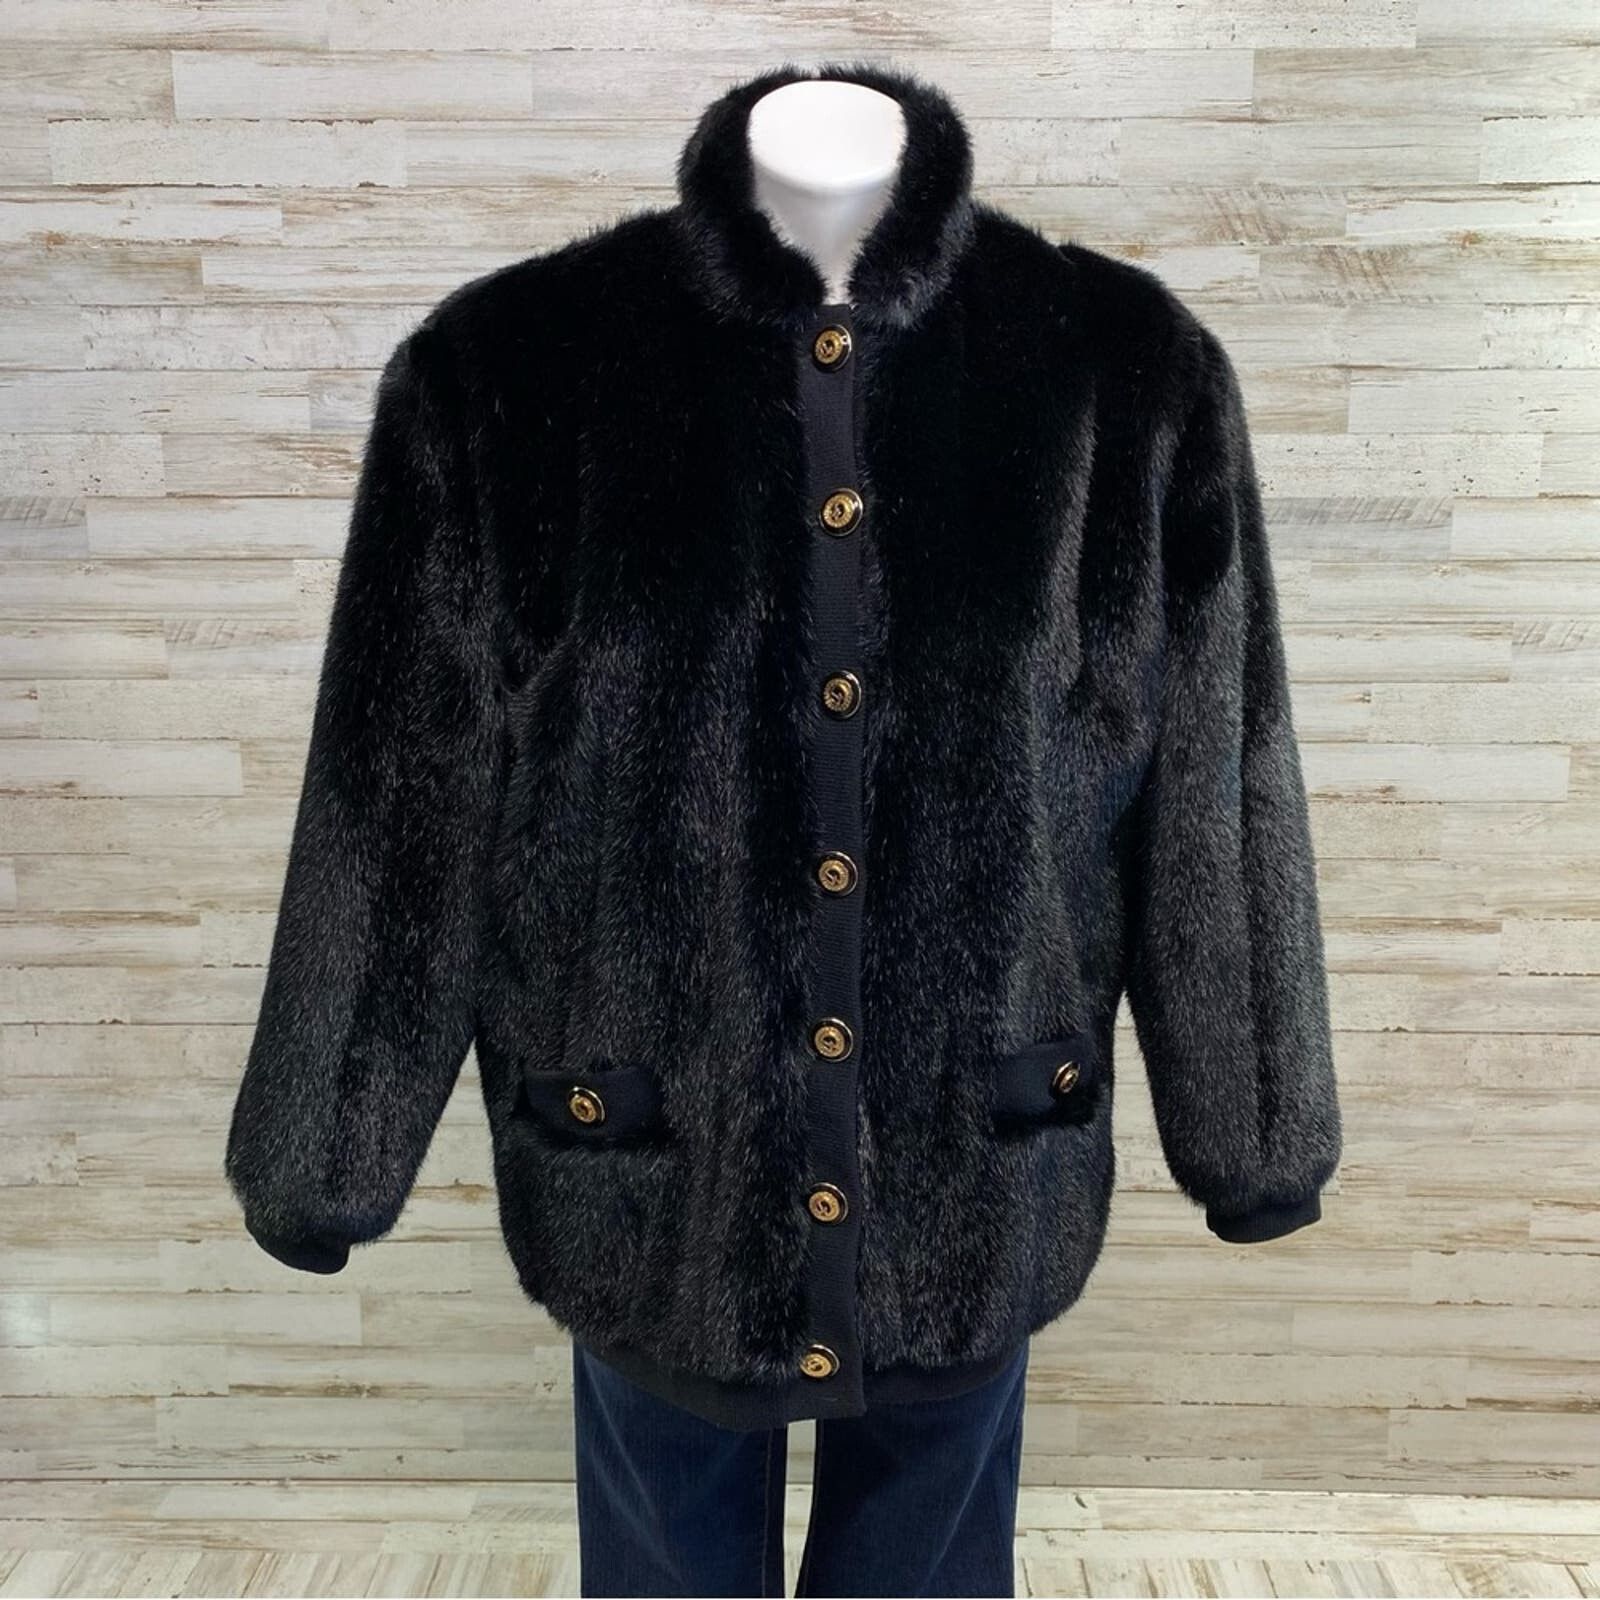 St. John Couture St. John Collection by Marie Gray Faux Fur Jacket Vest XS Size XS / US 0-2 / IT 36-38 - 2 Preview